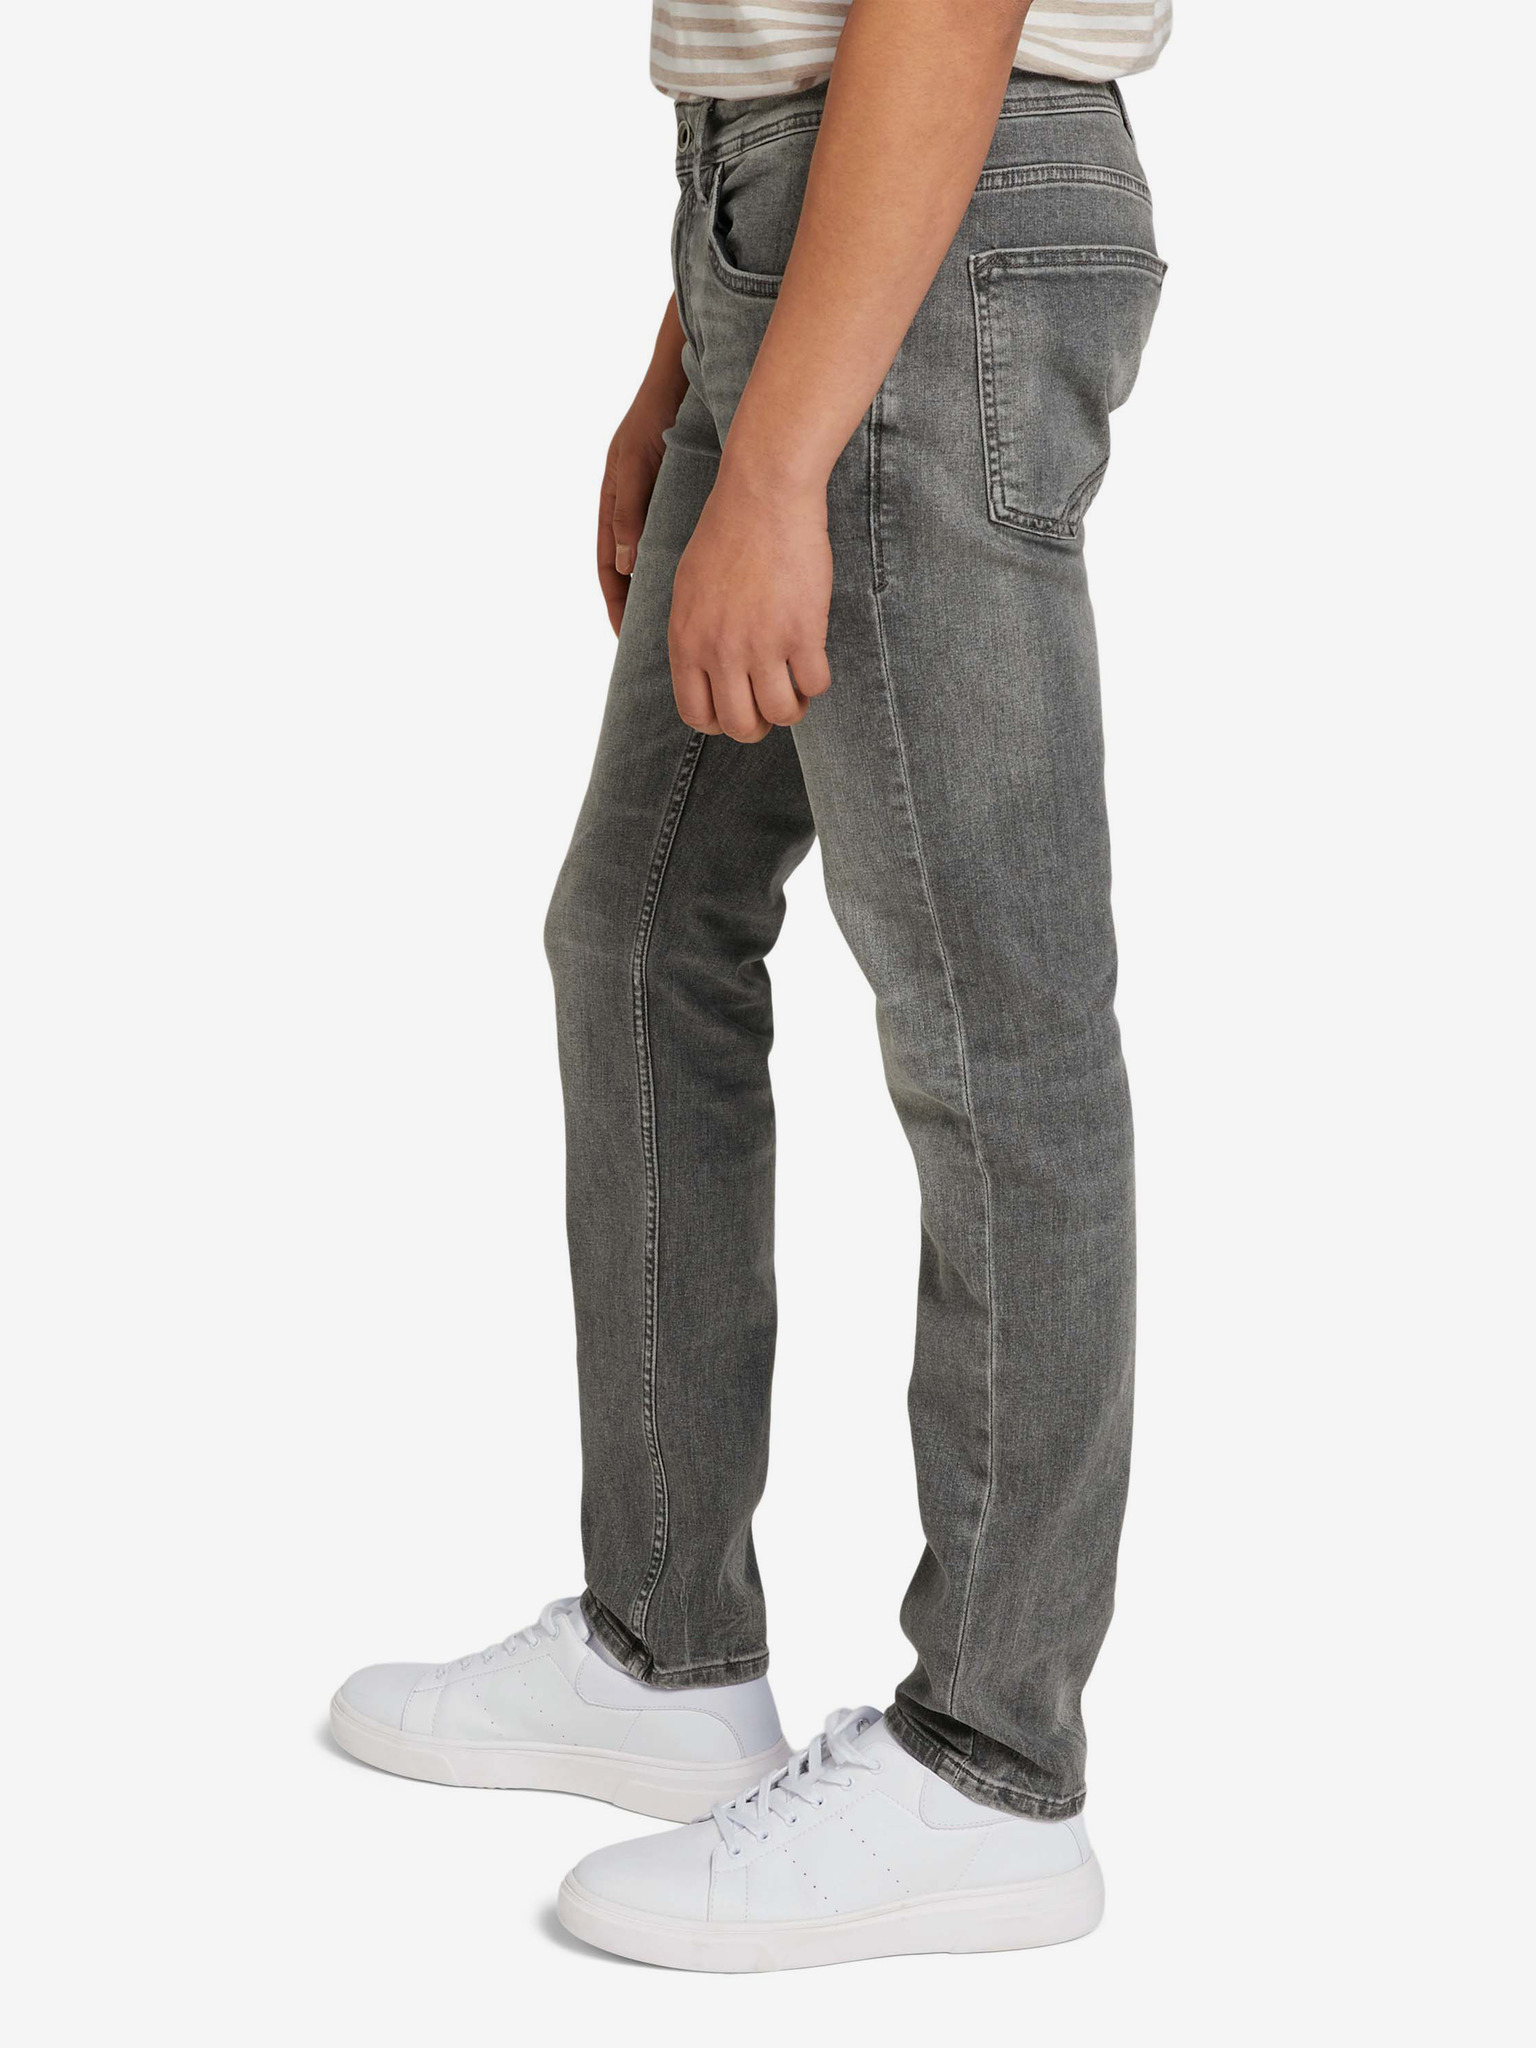 Tom Tailor Alexa Skinny Jeans Women's 28 Zipper Pockets Faded Black Stretch  | eBay